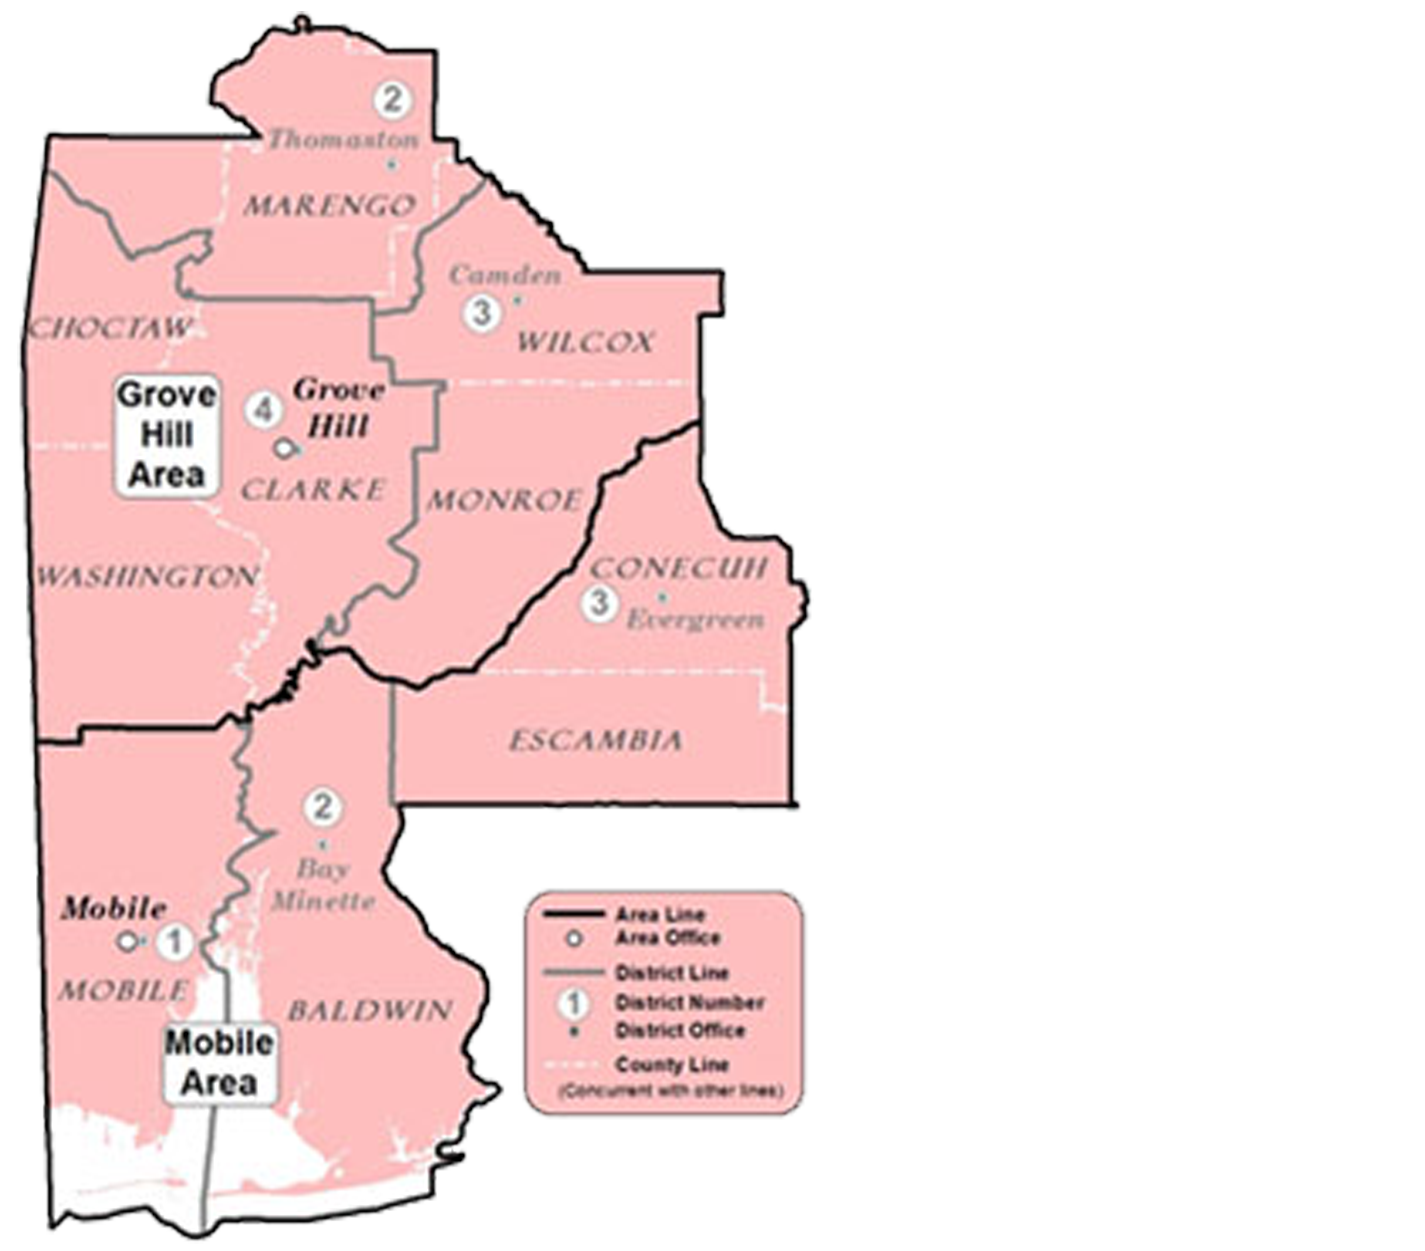 ALDOT Map of Southwest Region